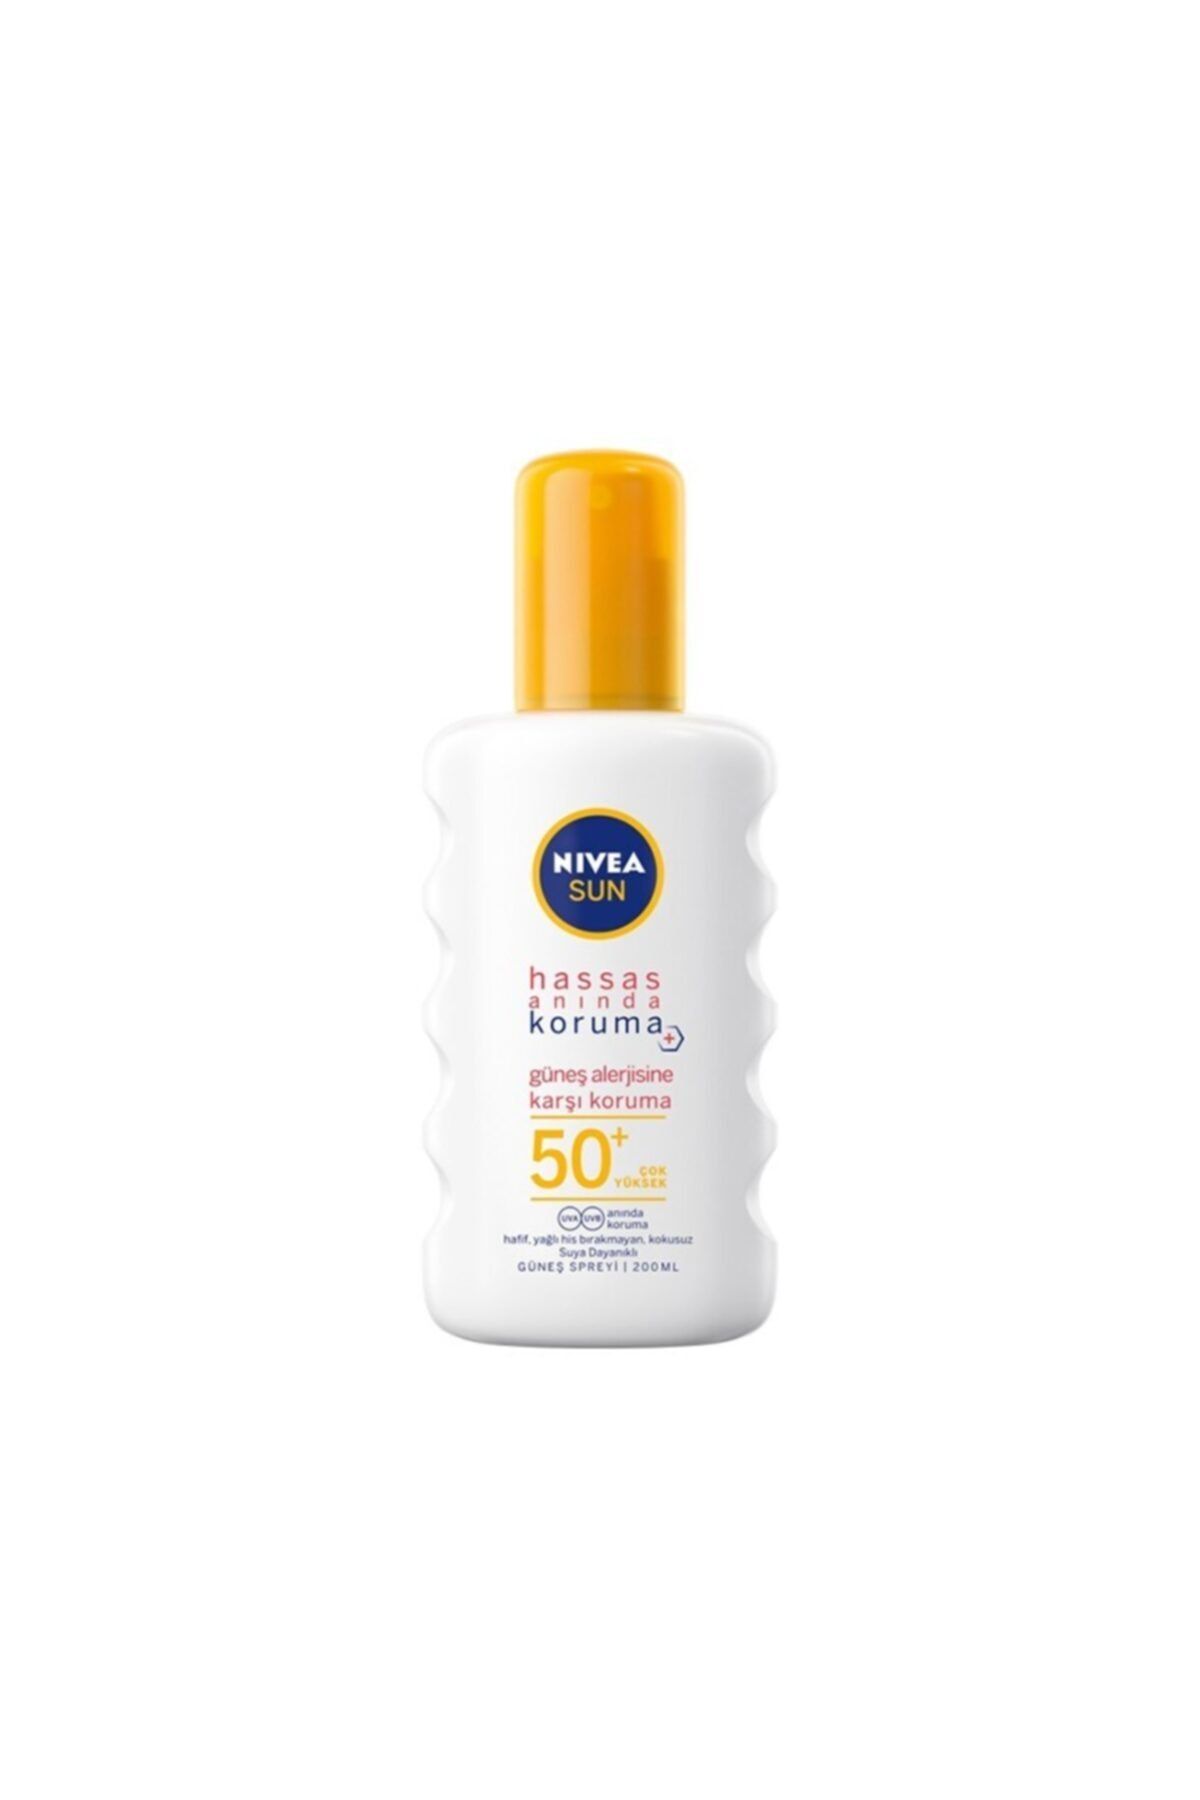 NIVEA اسپری ضد آفتاب حساس کودکان بدون بو 200 میلی لیتر